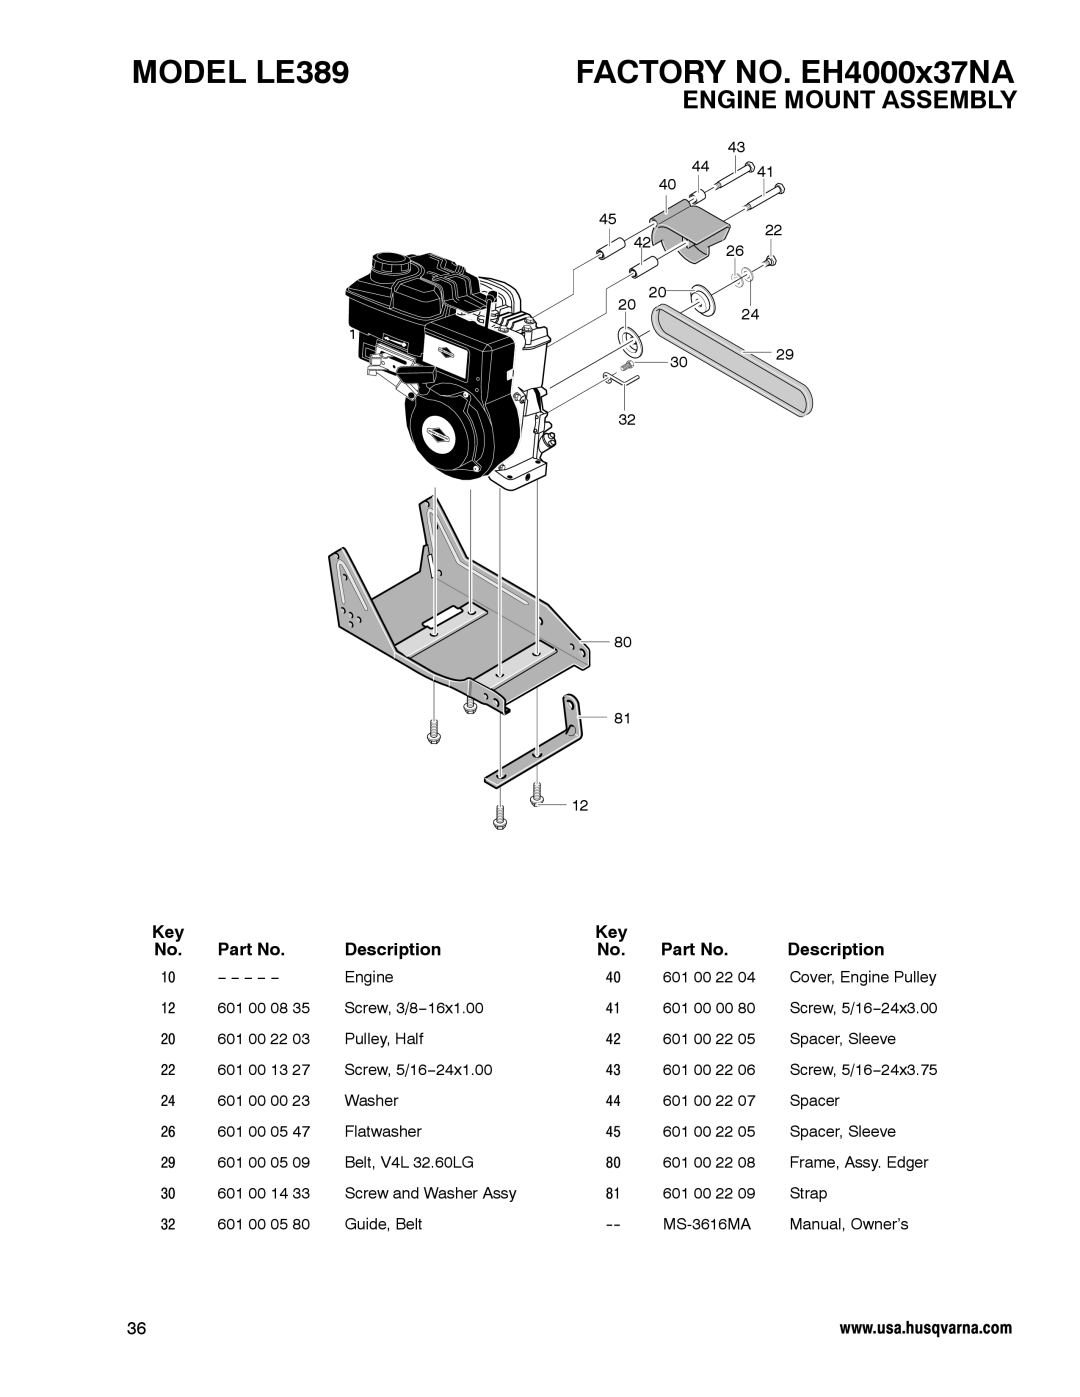 Husqvarna manual MODEL LE389, FACTORY NO. EH4000x37NA, Engine Mount Assembly, Description 